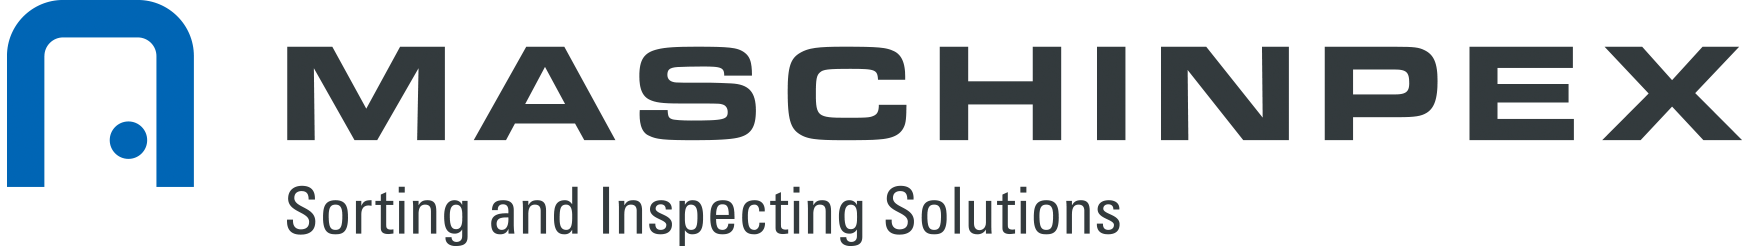 MASCHINPEX Maschinenbau GmbH